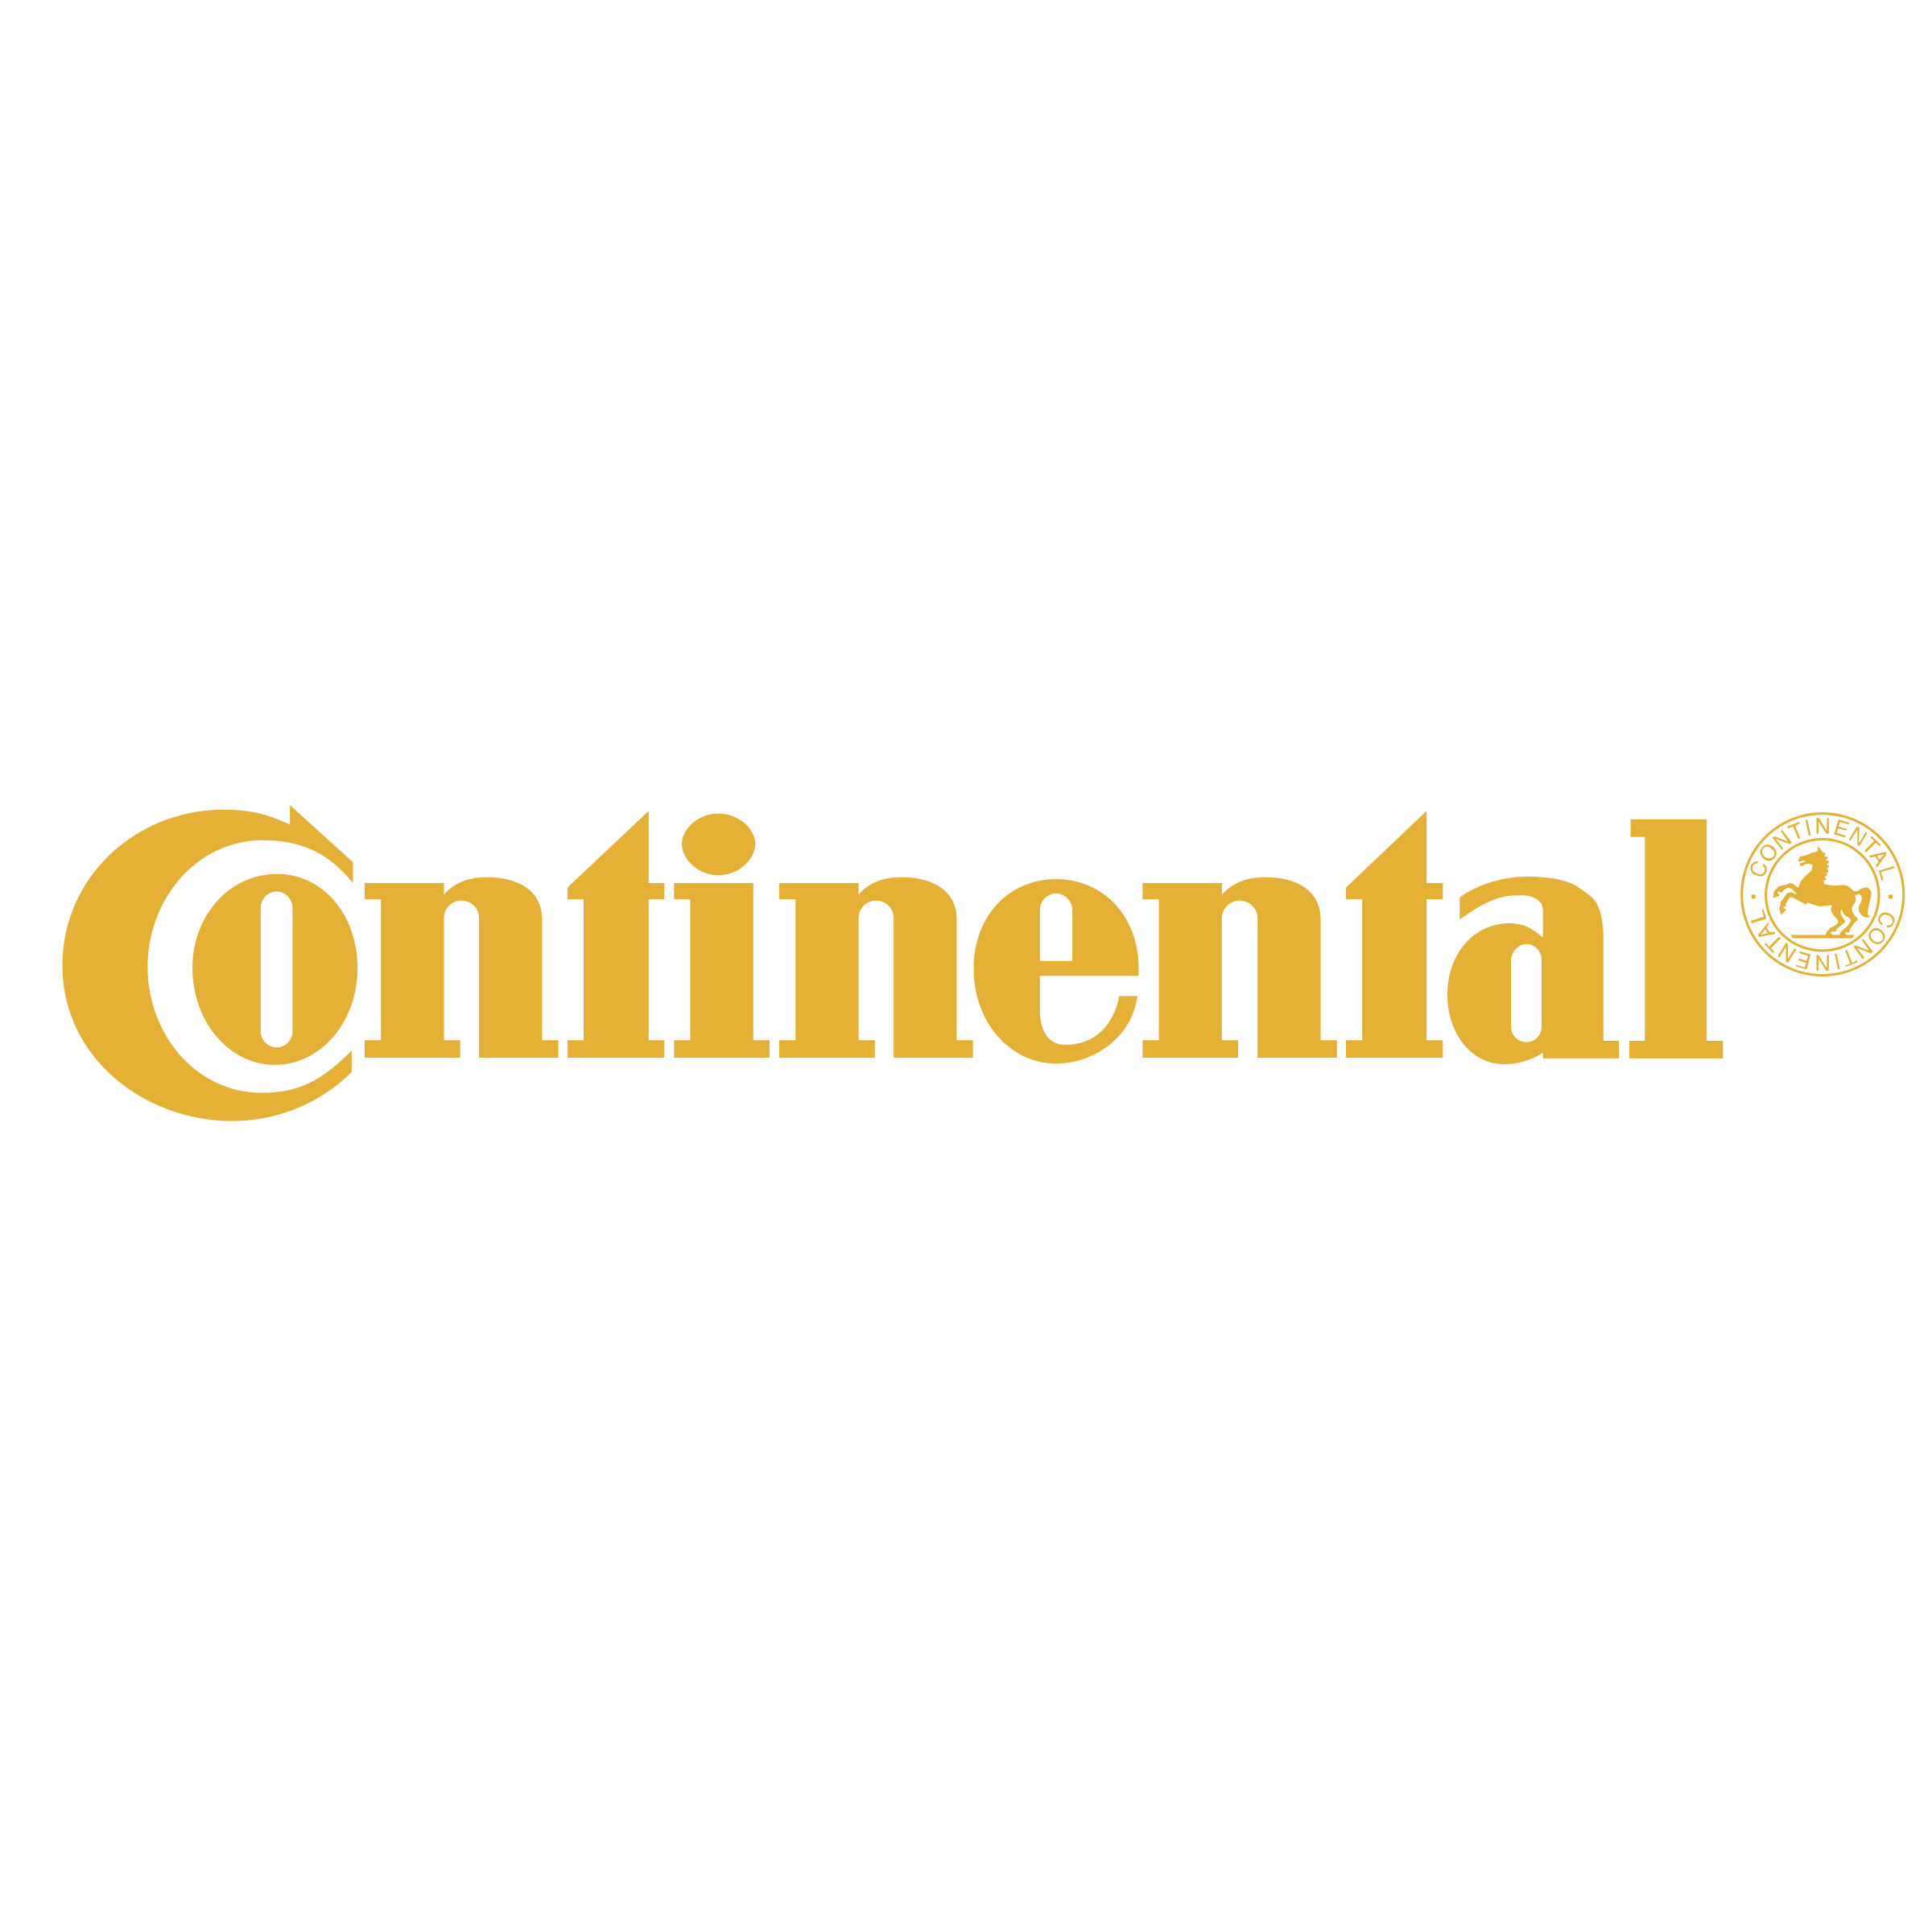 Continental Logo PNG - 179699